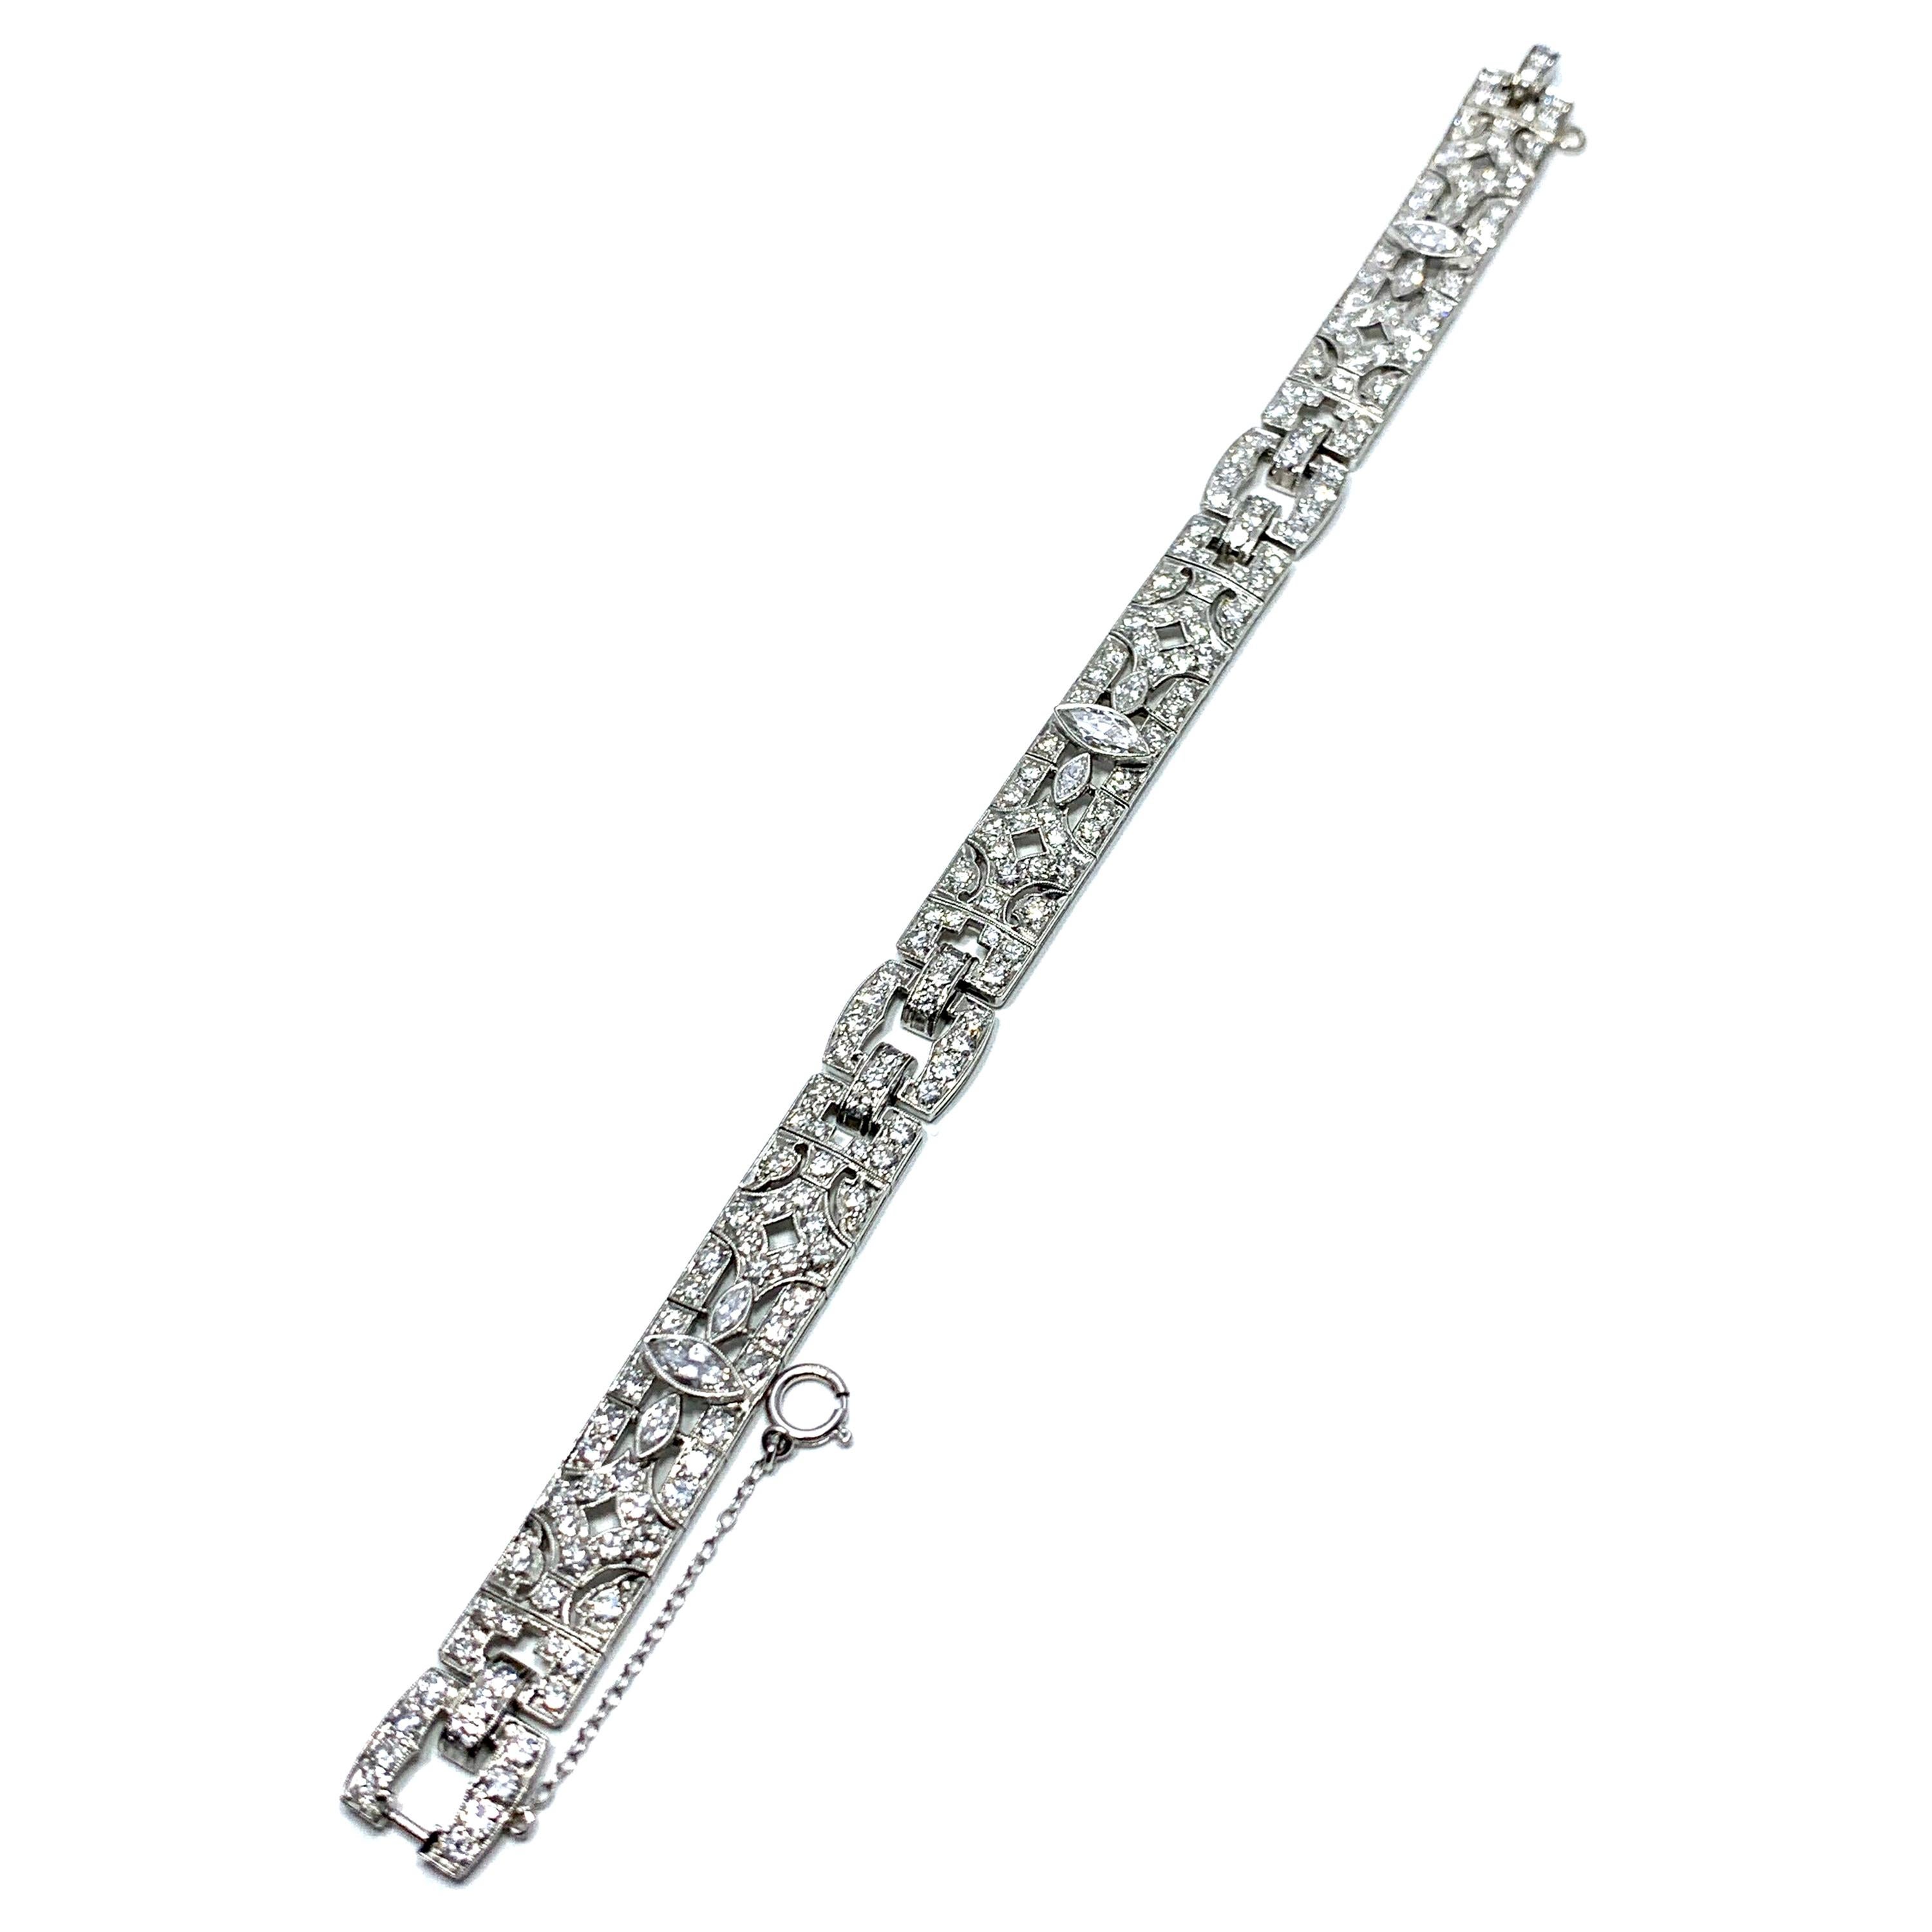 6.26 Carat Art Deco Style Diamond and Platinum Bracelet